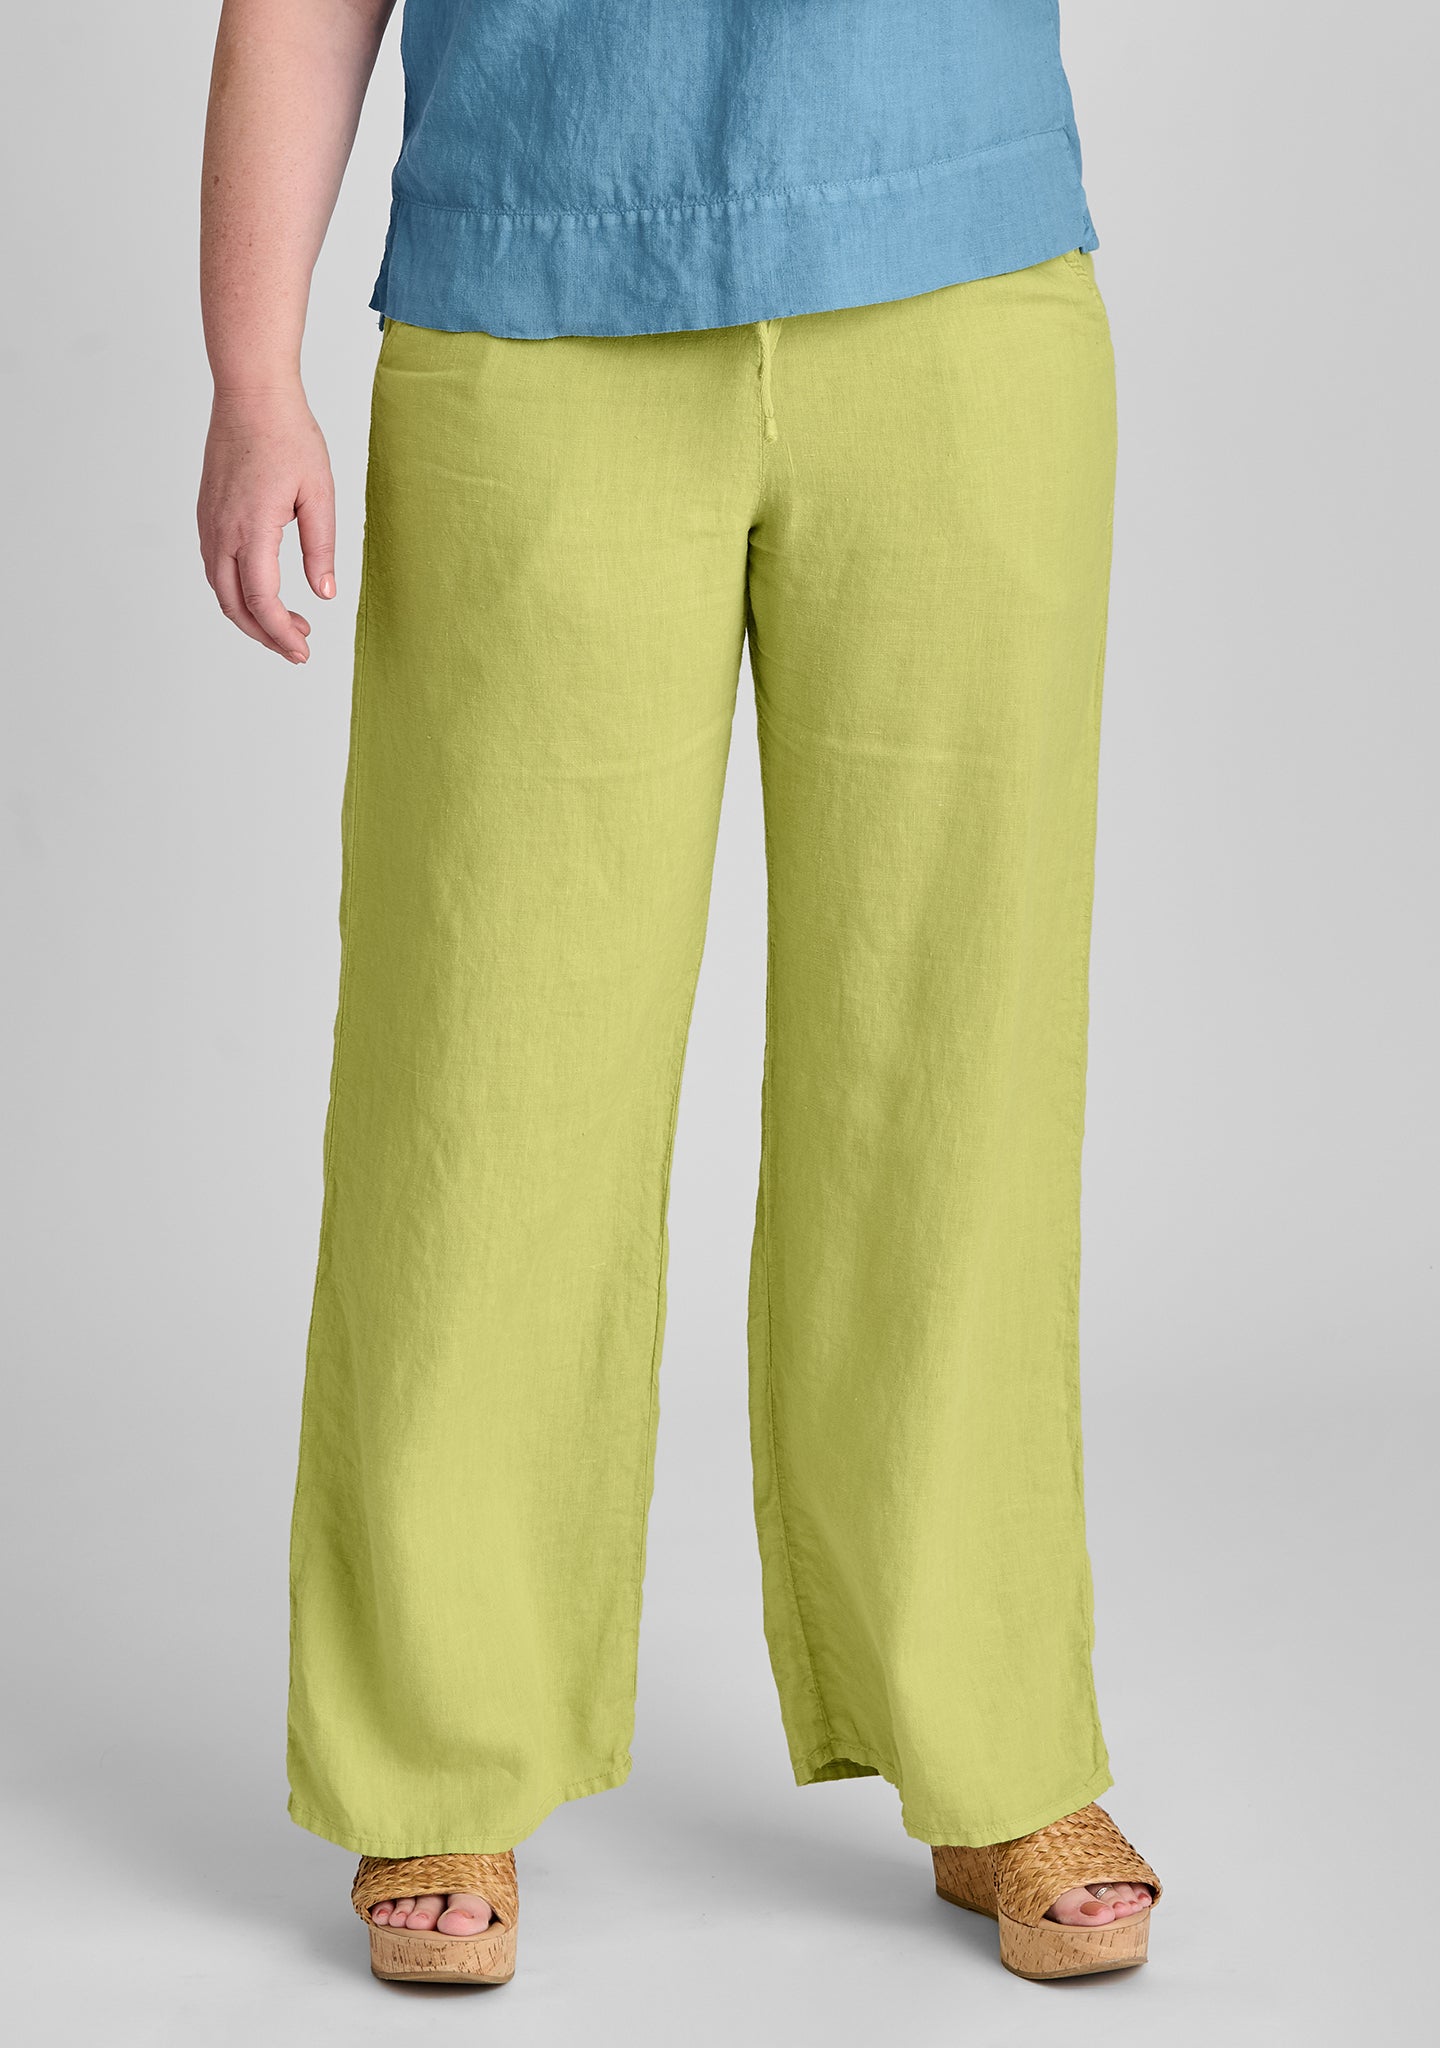 flat iron pant linen drawstring pants green